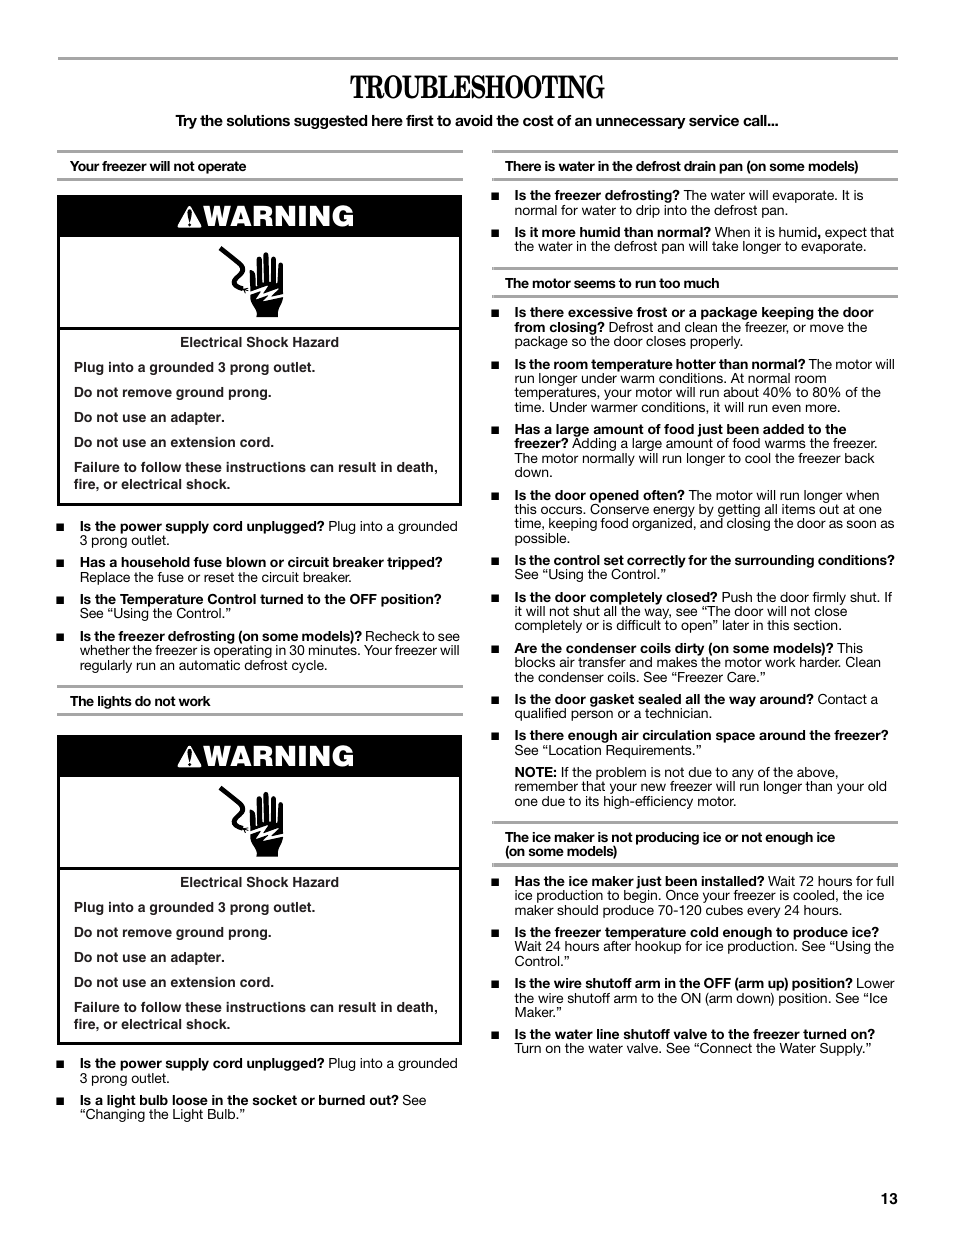 Troubleshooting, Warning | Whirlpool W10326800B Manuel d'utilisation | Page 13 / 32